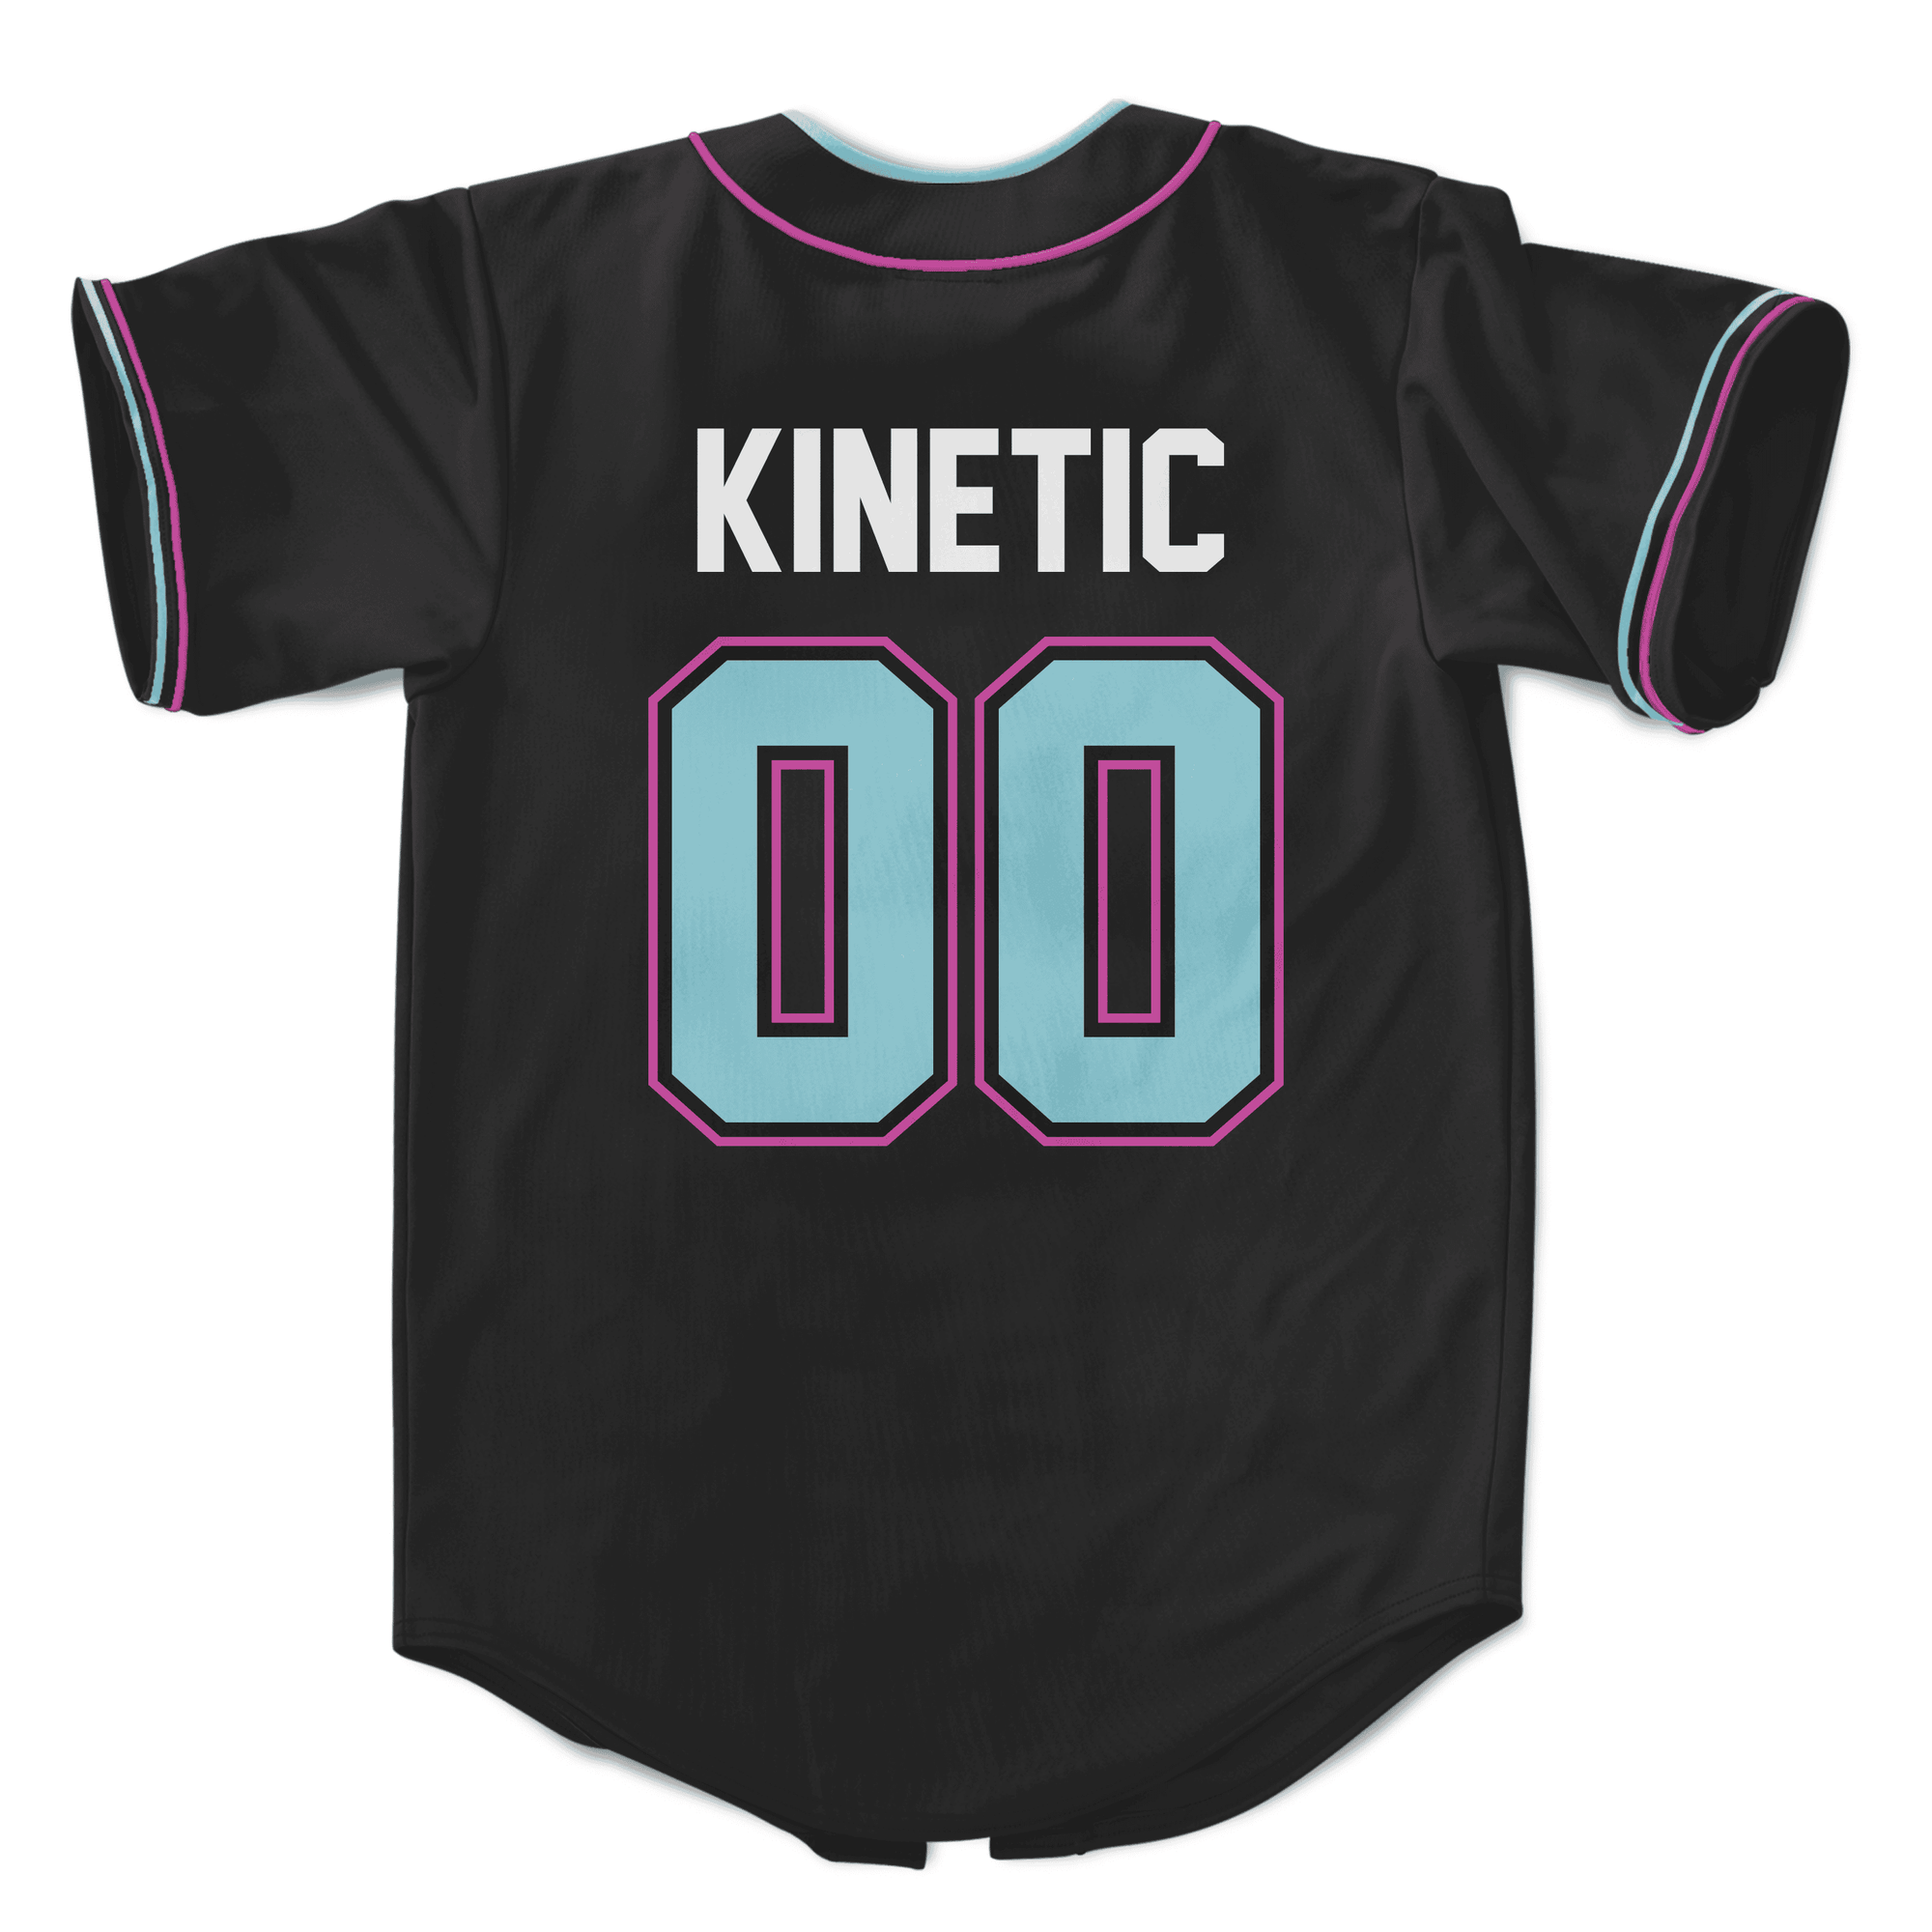 Kappa Sigma - Neo Nightlife Baseball Jersey